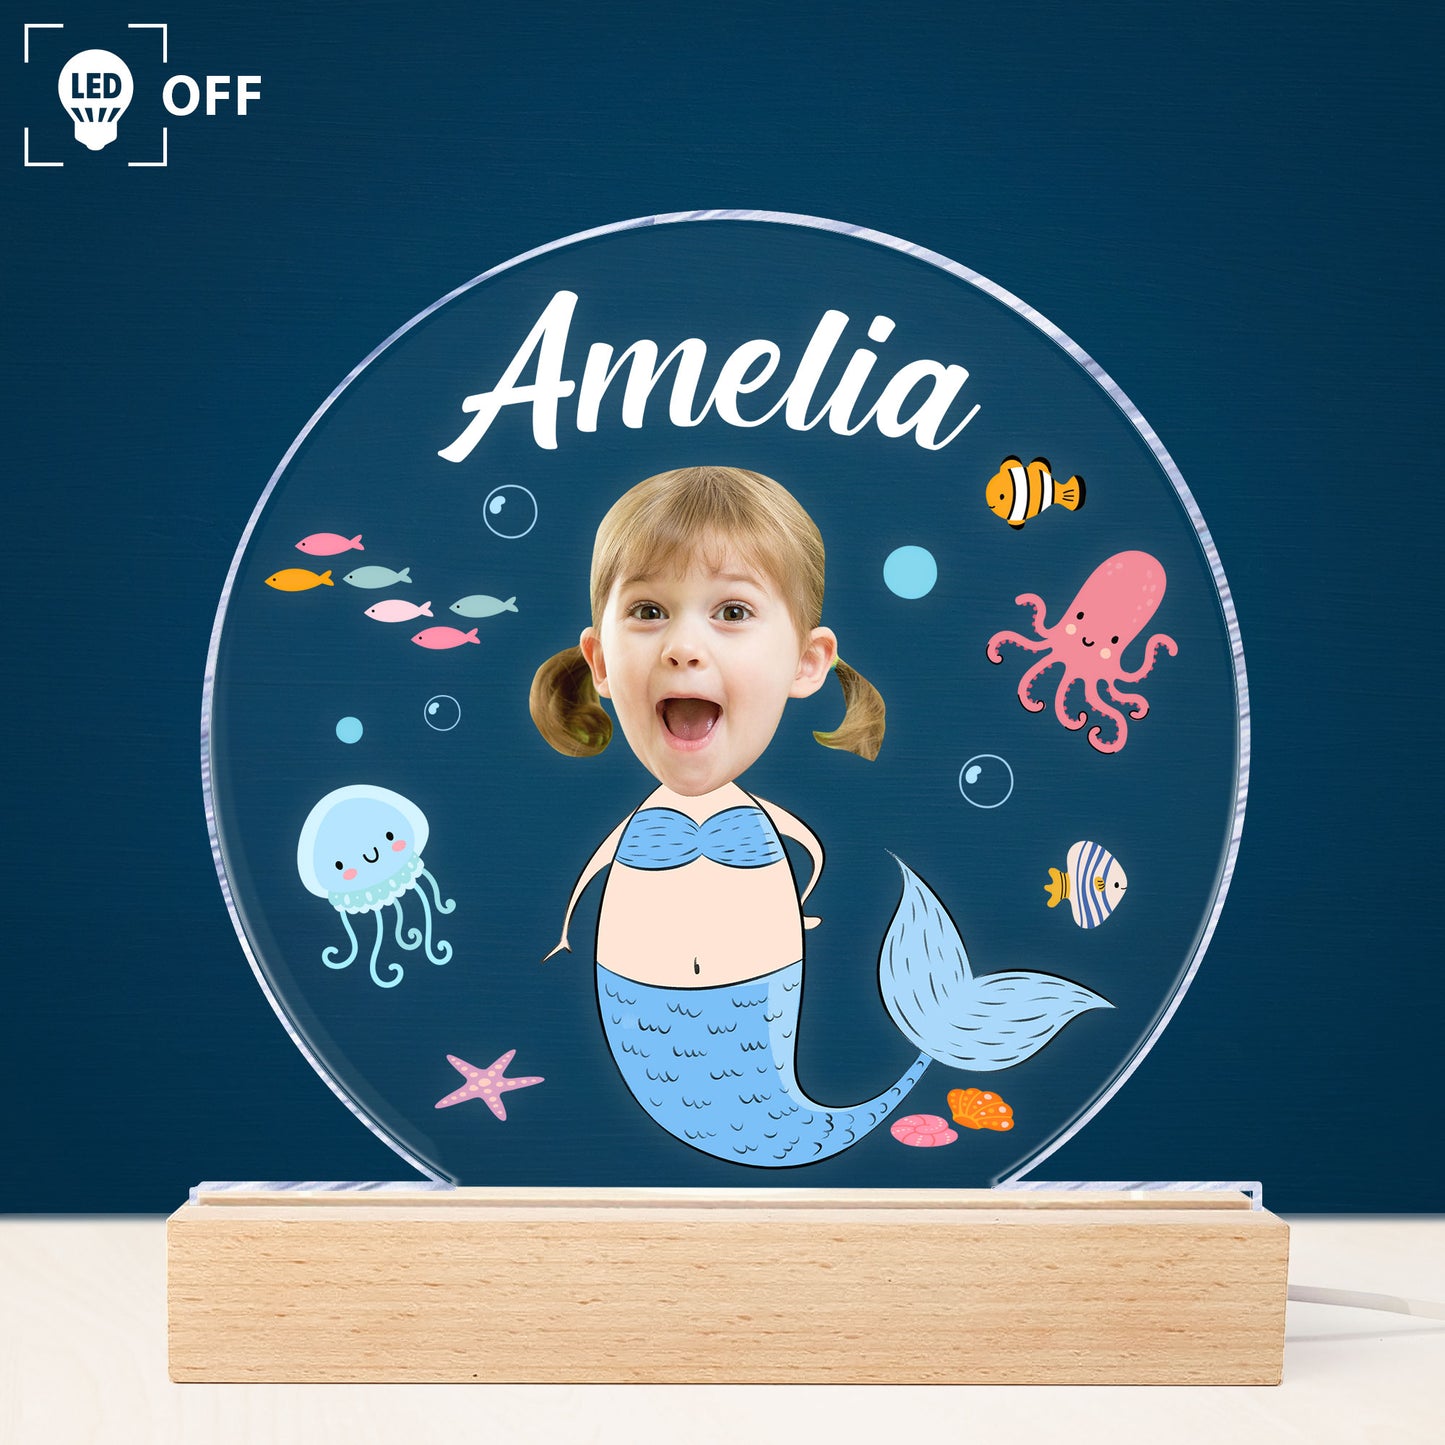 Little Mermaid Kid - Personalized Photo LED Light